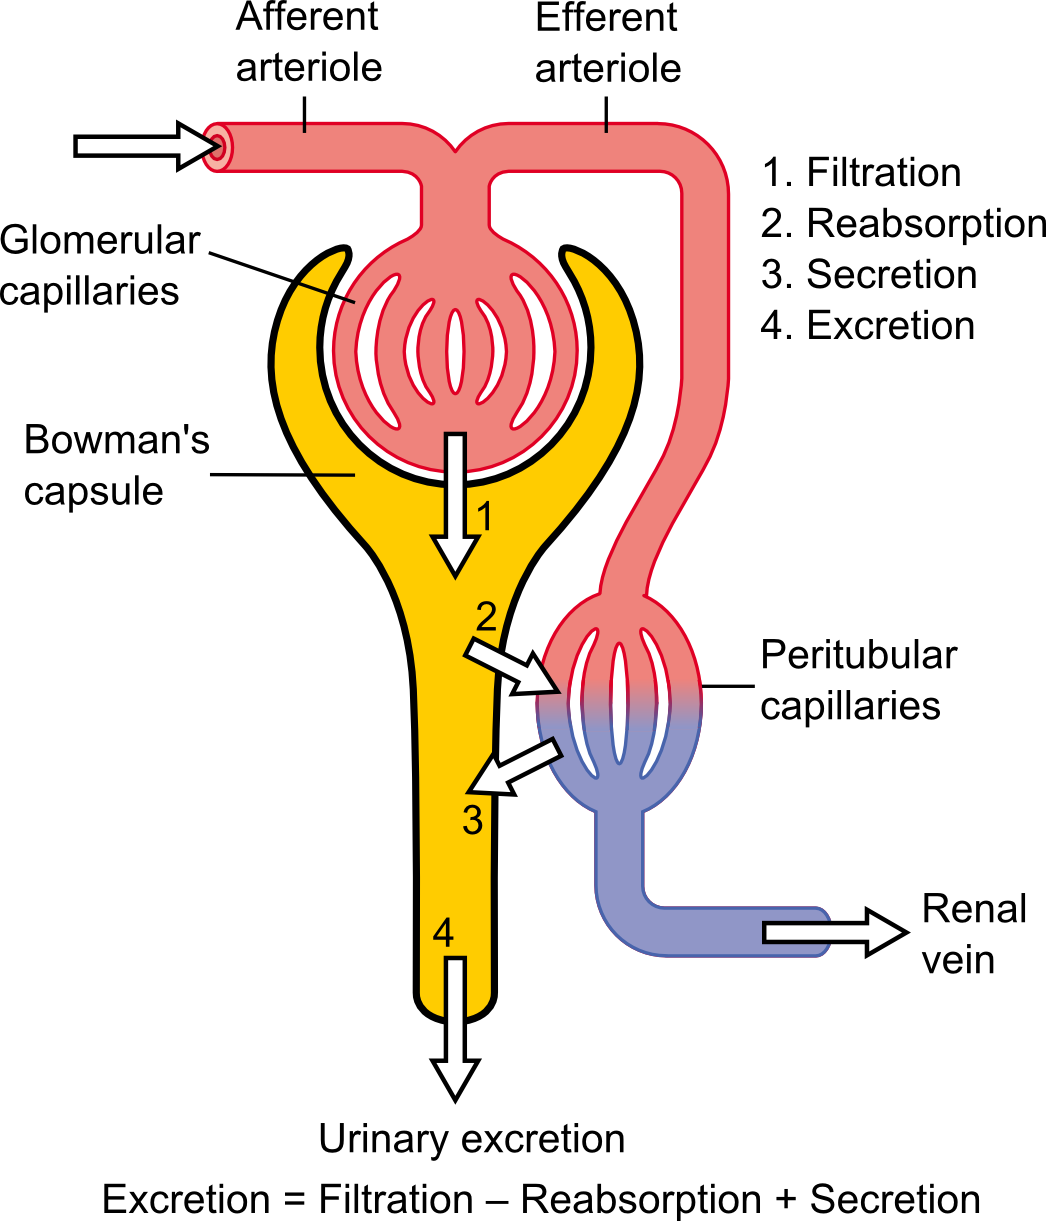 simple diagram of nephron